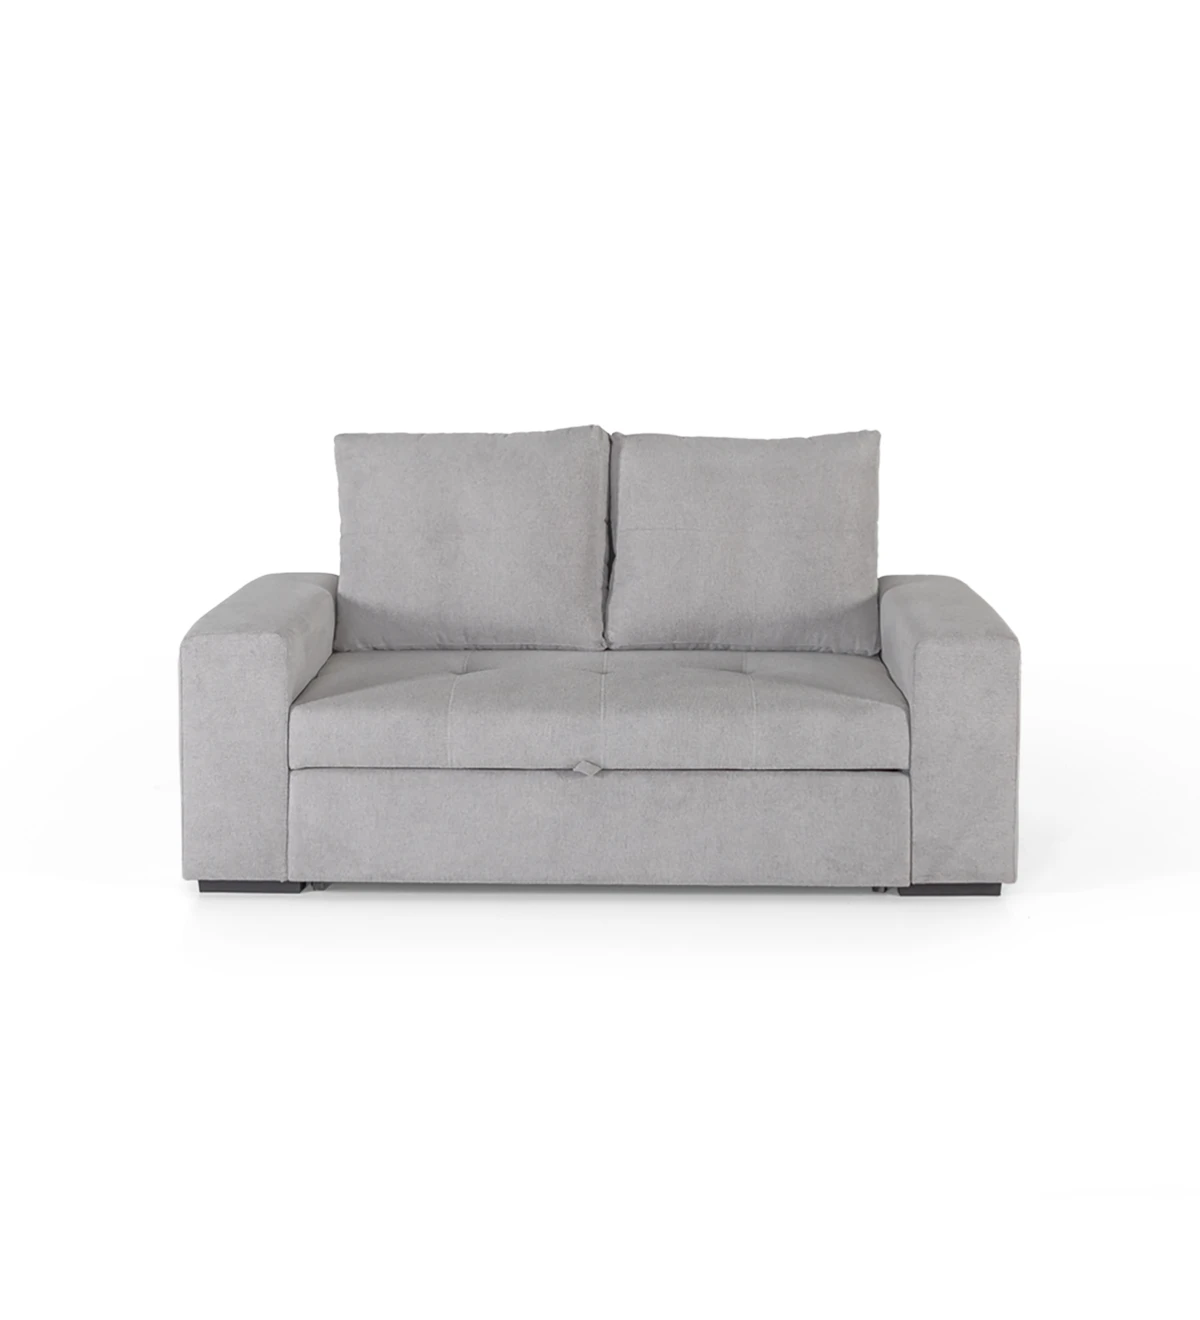 Sofá cama Haiti 2 plazas tapizado en tela gris, cojines respaldo desenfundables, 180 cm.